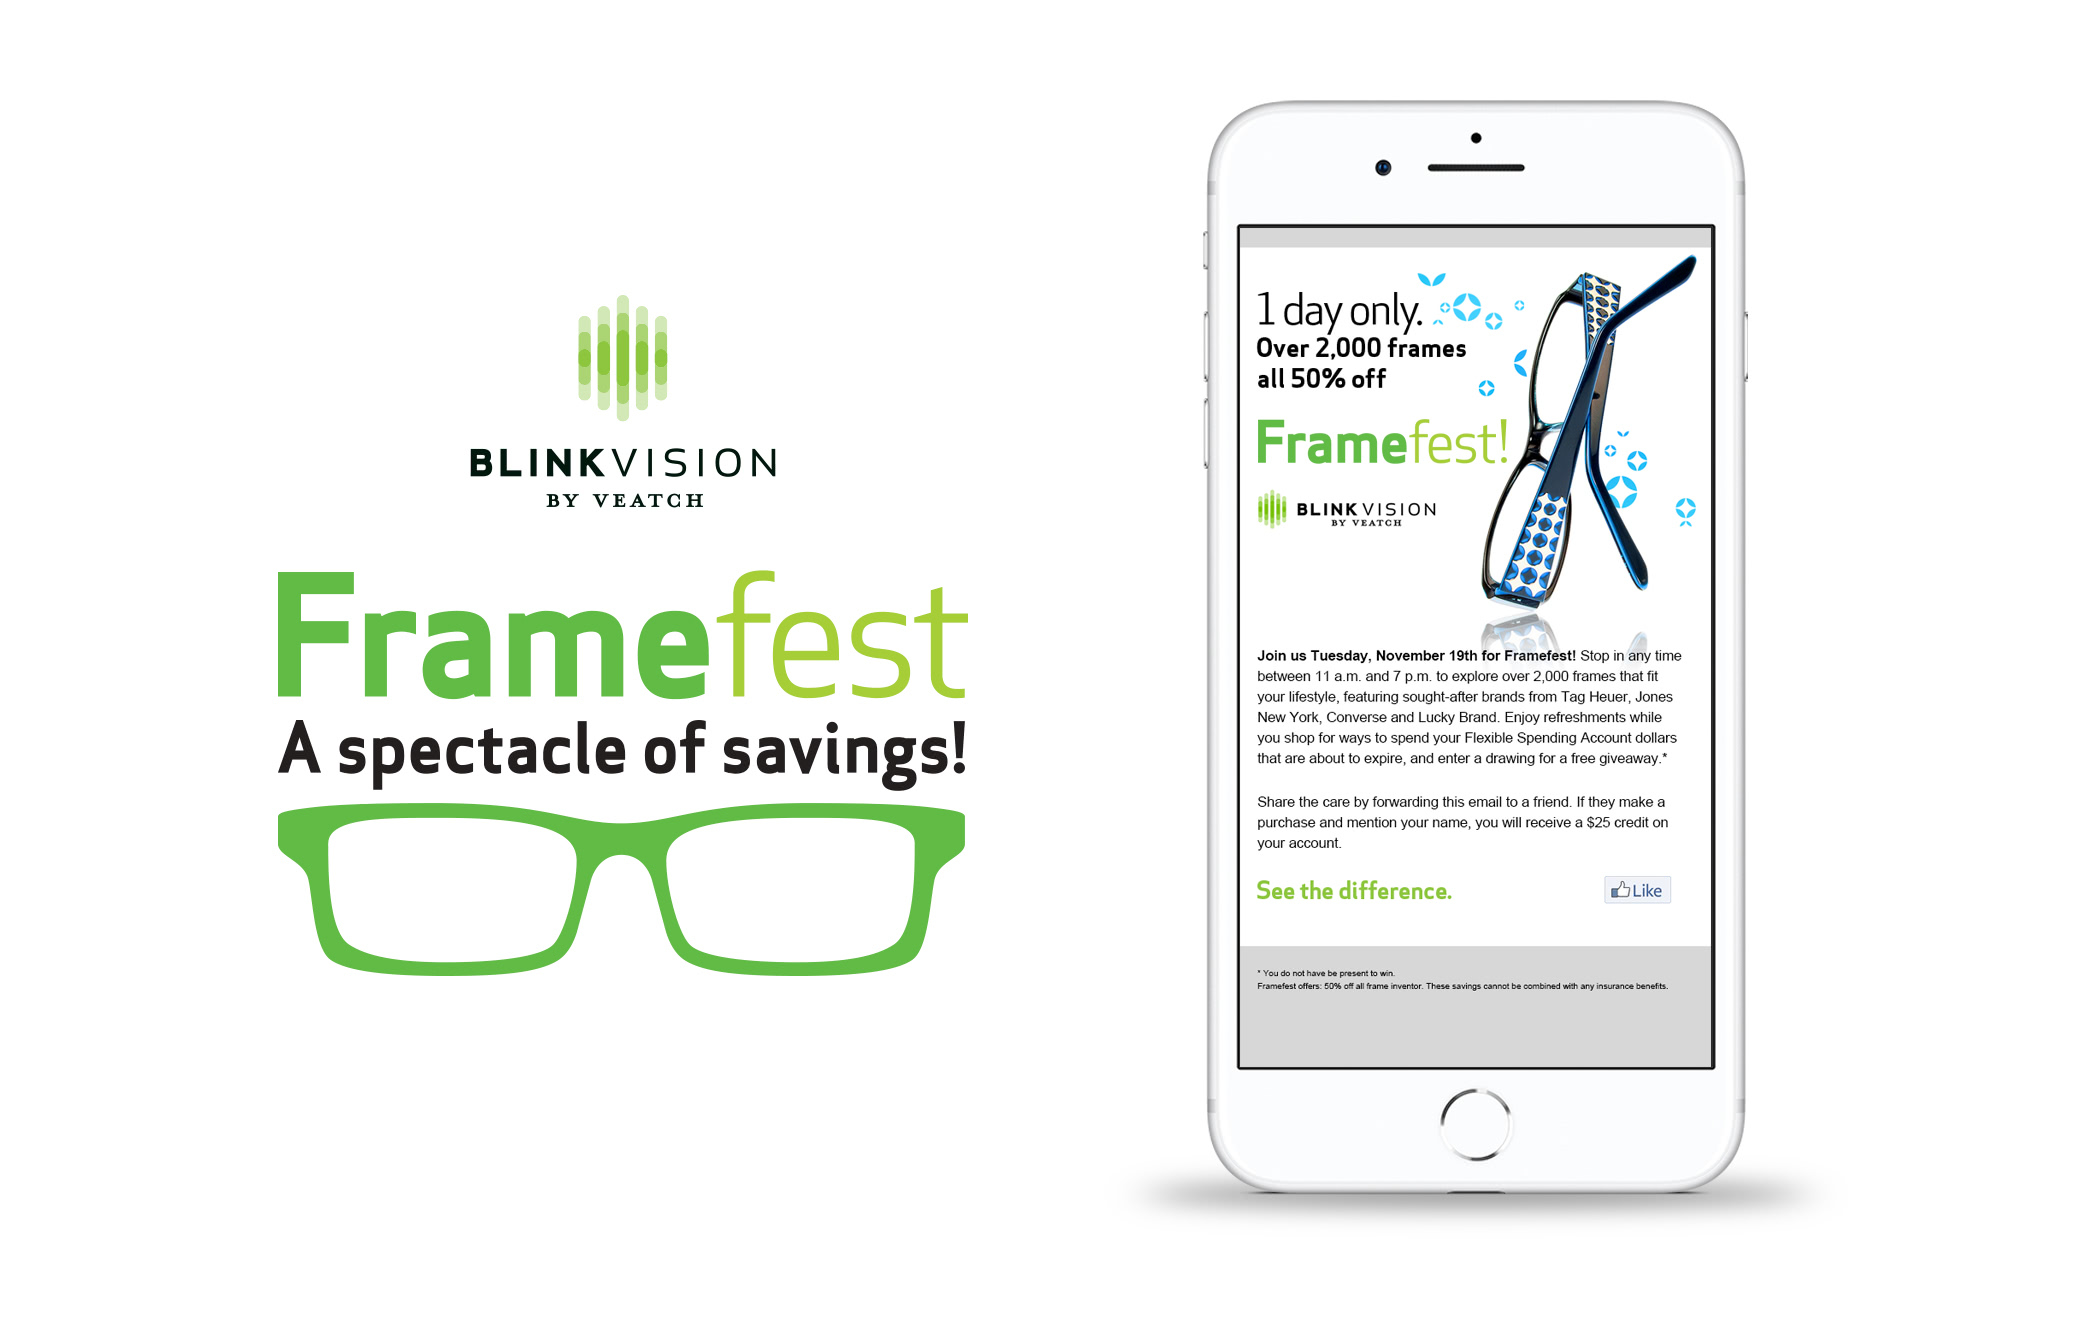 Blink Vision Frame Fest ad and mark